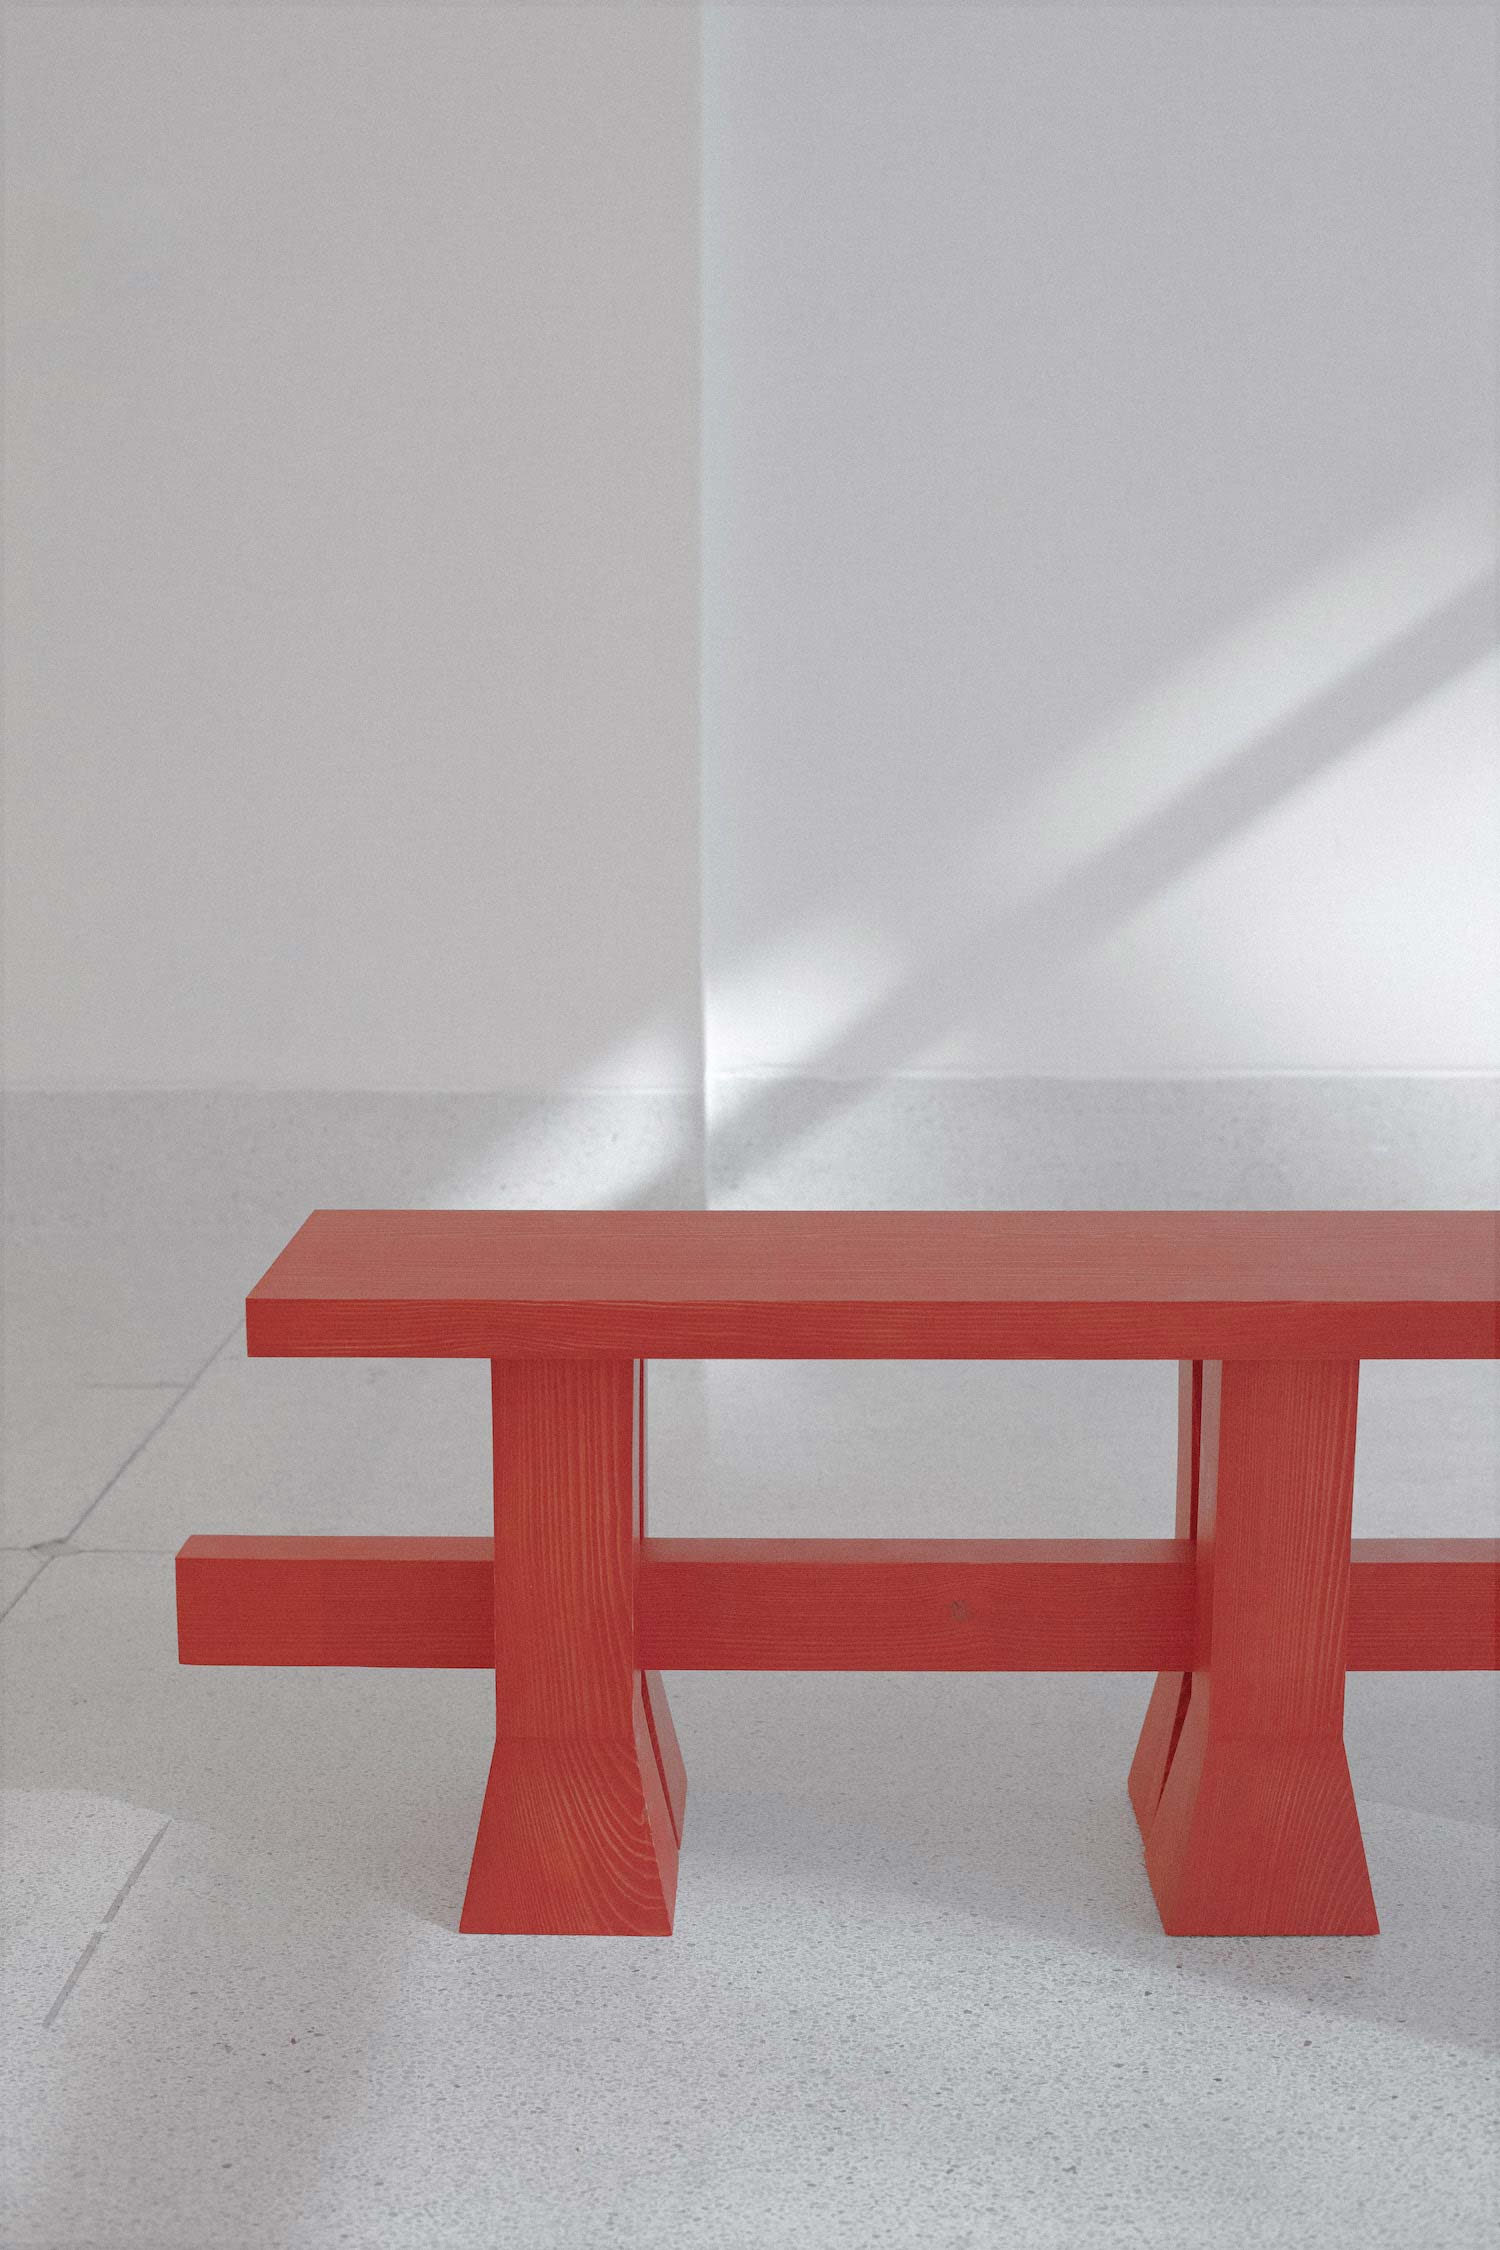 detail-Arnaud-red-wooden-bench-by-Jiri-Krejcirik-06